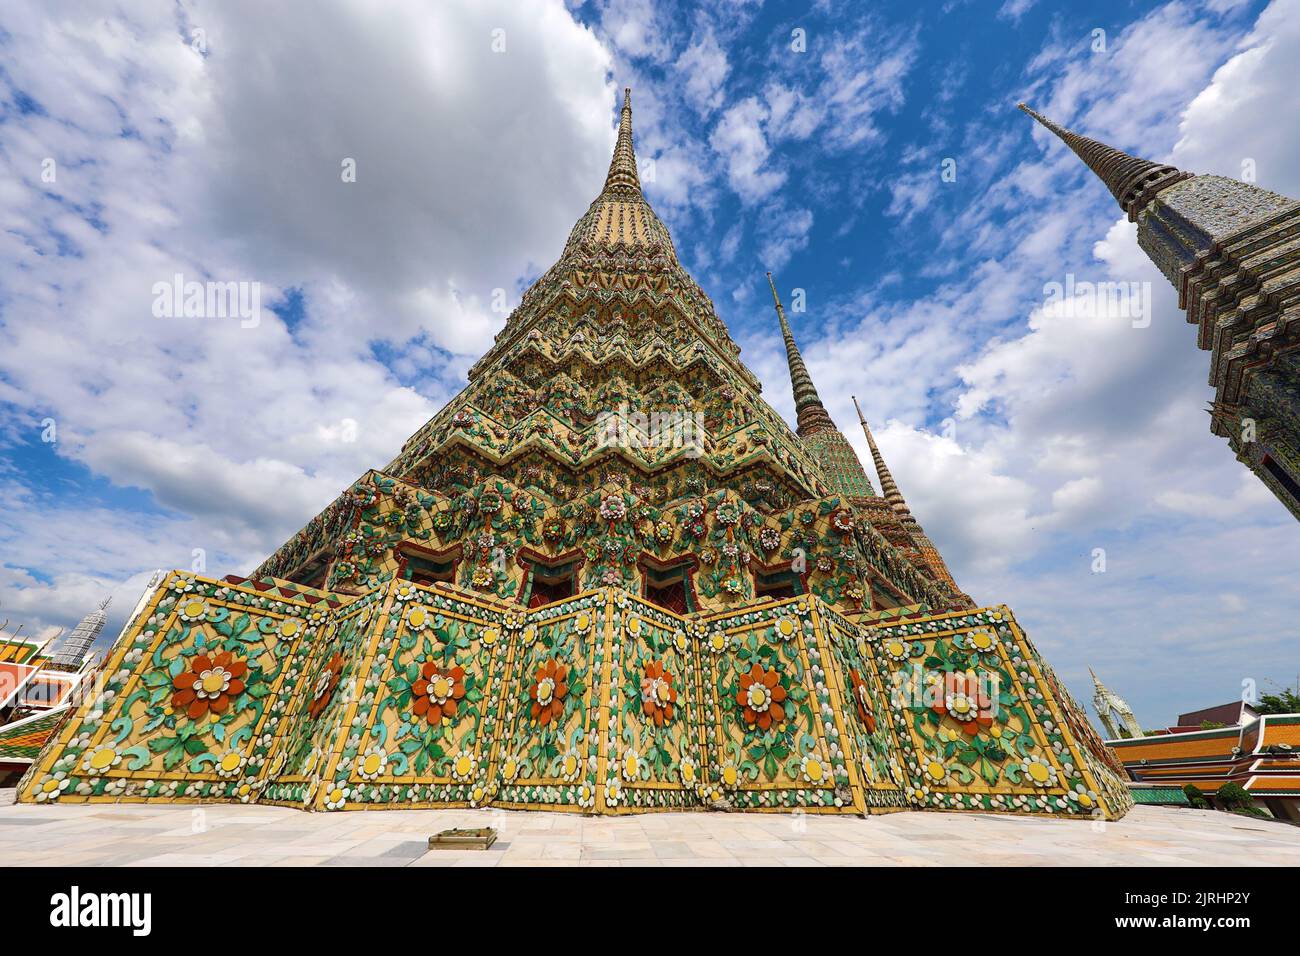 Clochers de chedis carrelés au temple de Wat Pho, Bangkok, Thaïlande Banque D'Images